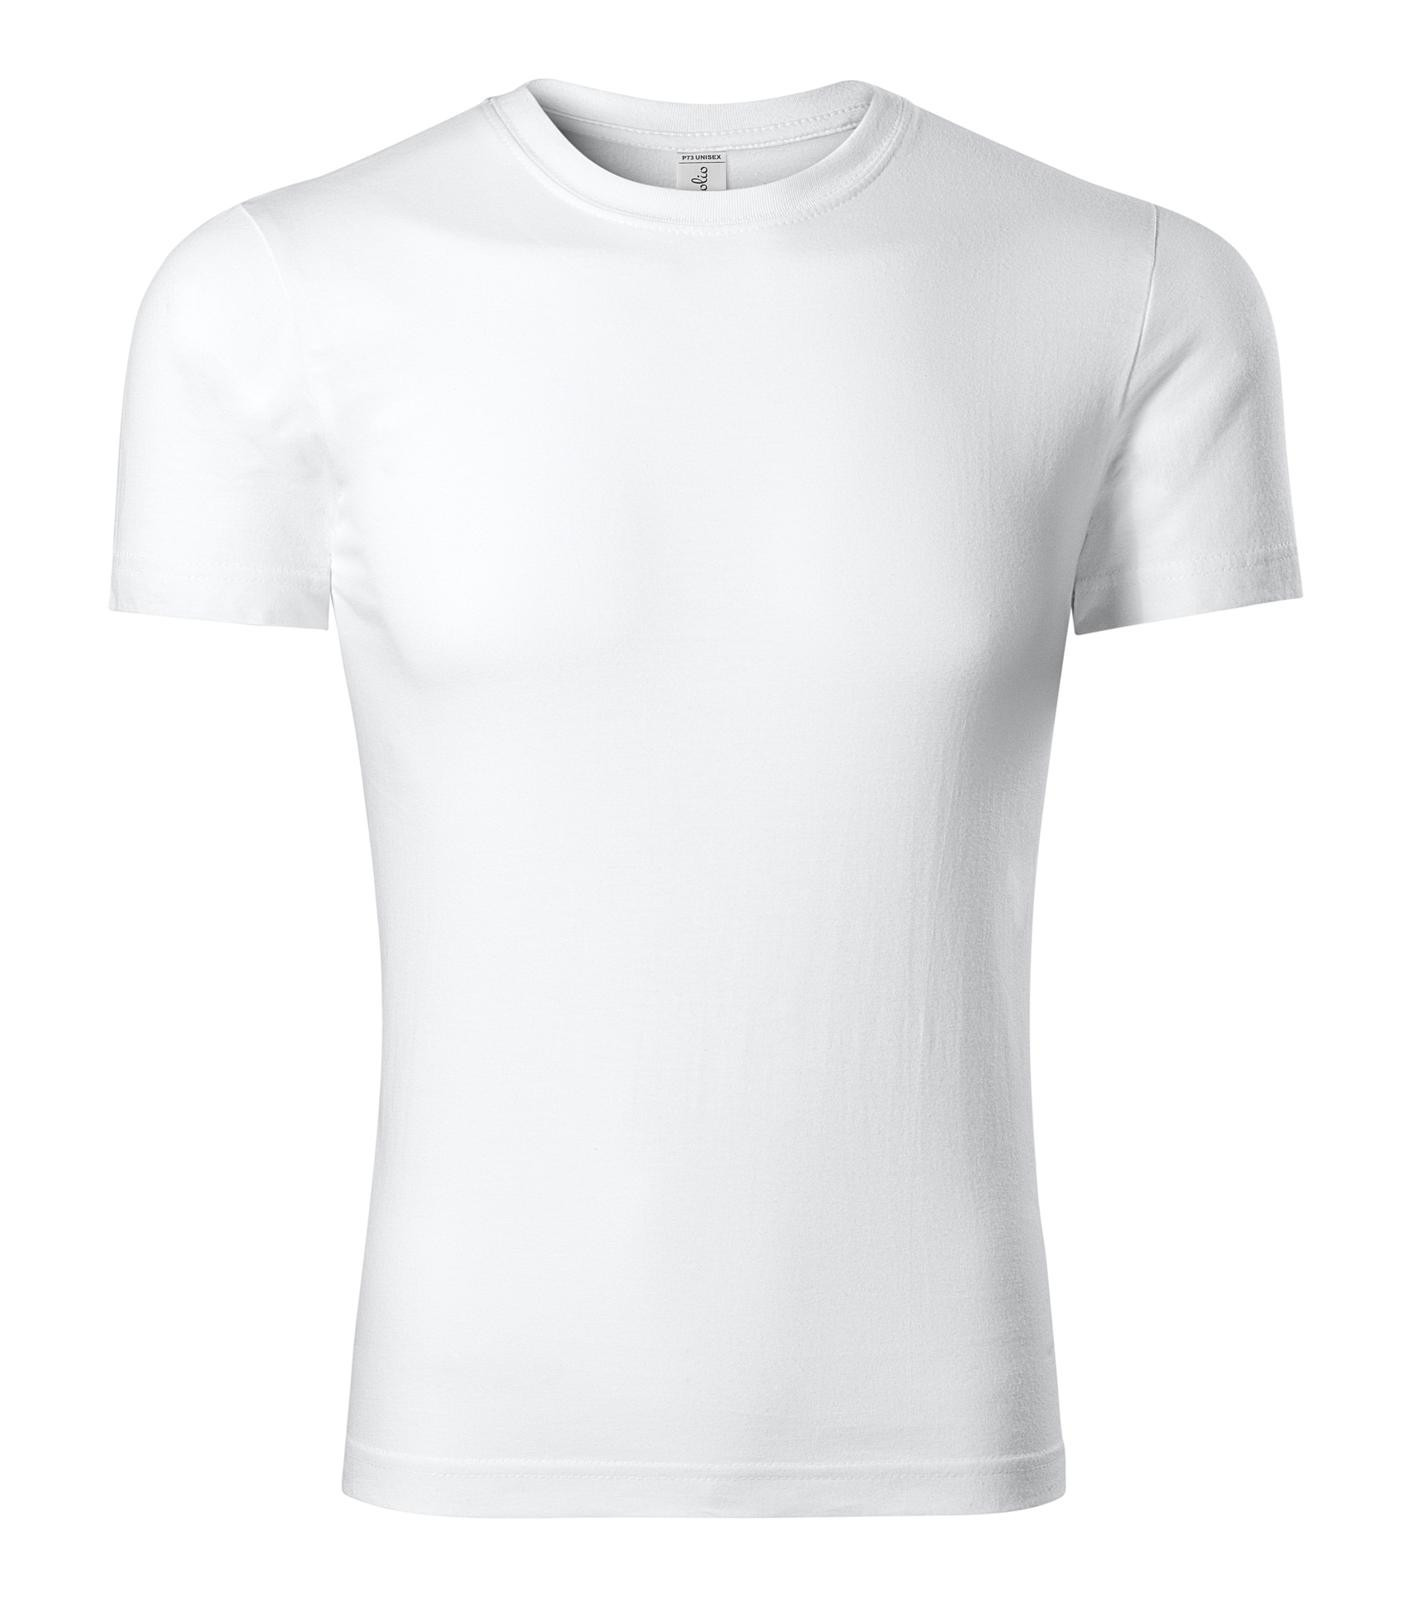 Unisex tričko Piccolio Paint P73 - veľkosť: 3XL, farba: biela